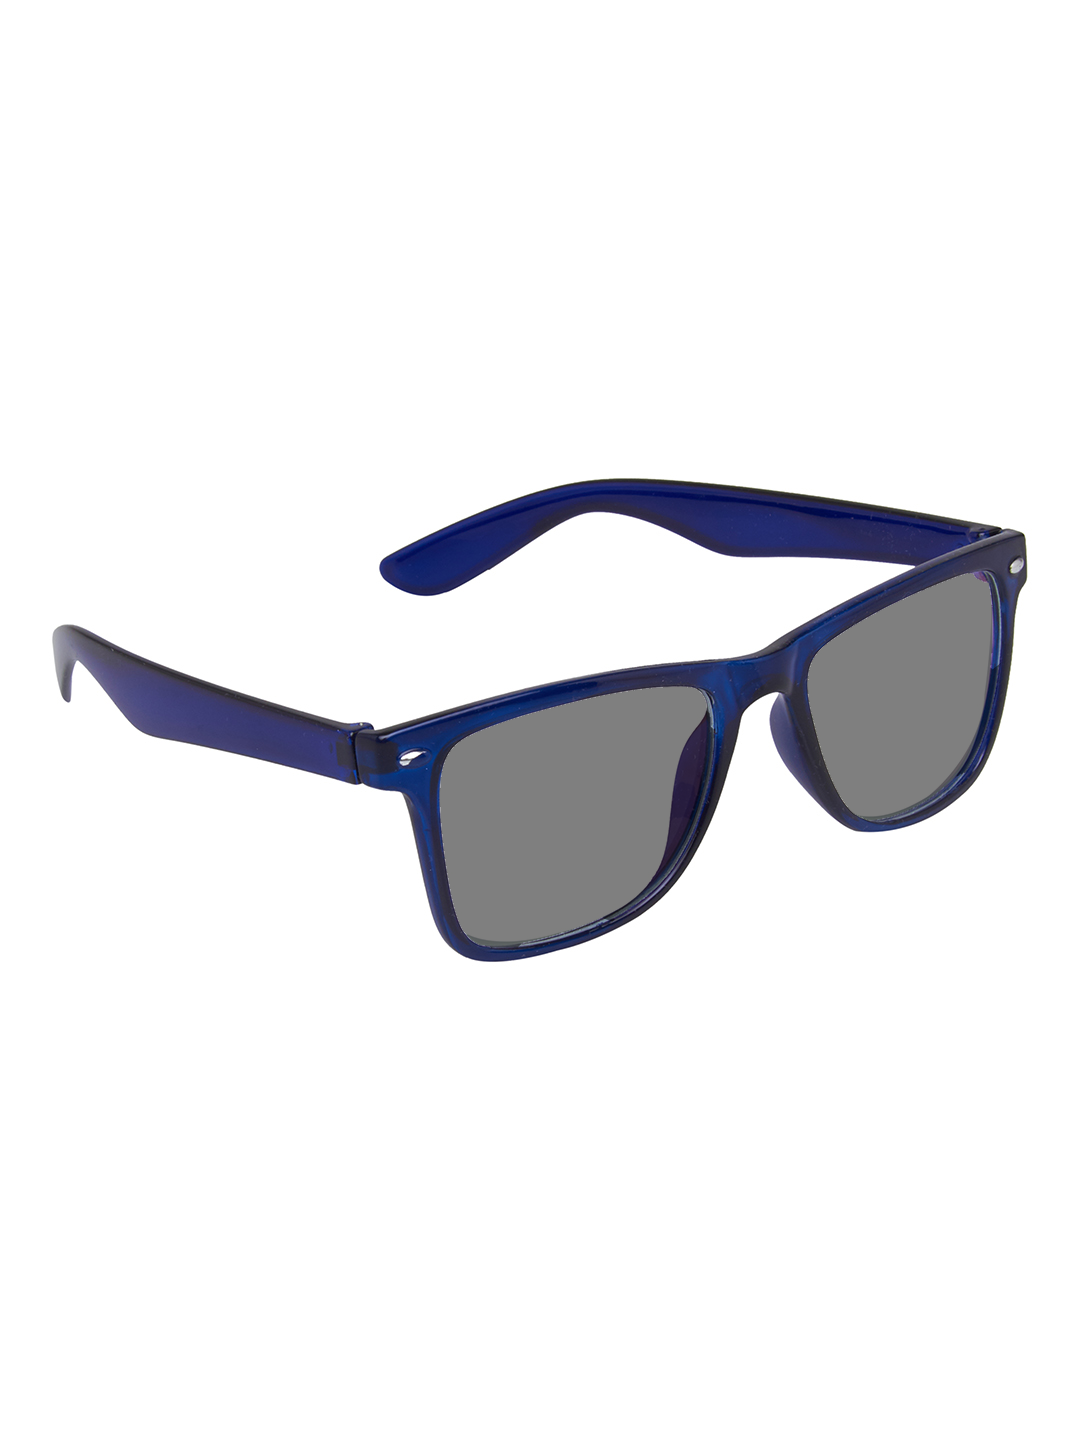 Photochromic Day & Night Computer Gaming Glasses + Sunglasses Unisex Wayfarer Eyewear (7979 Blue)